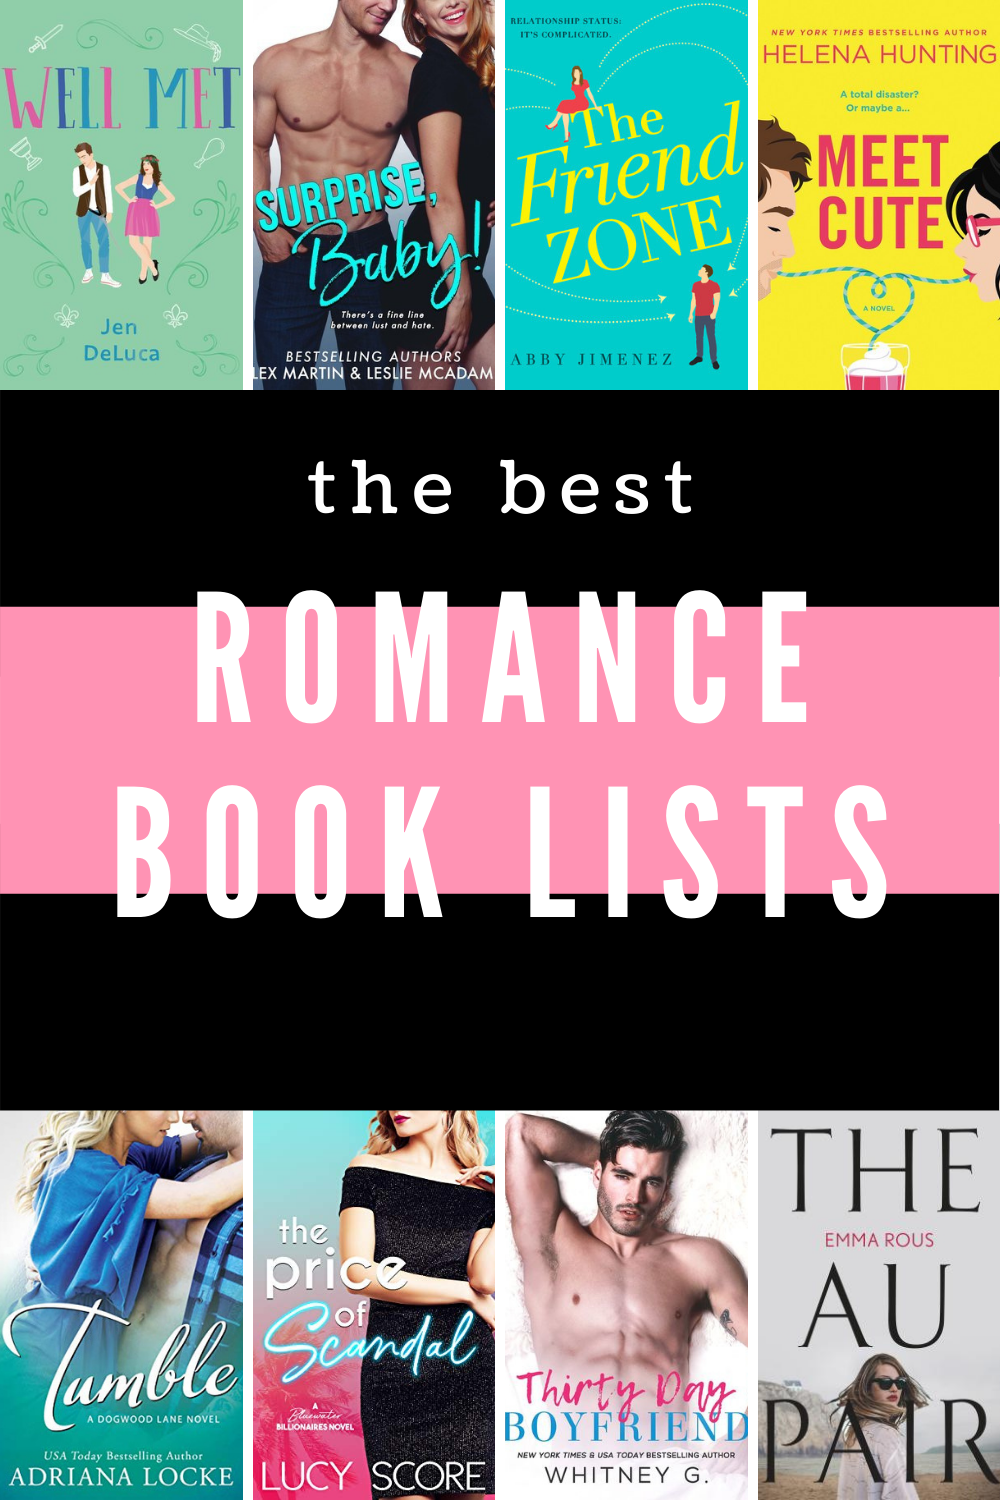 The Best Romance Book Lists HEA Novel Thoughts